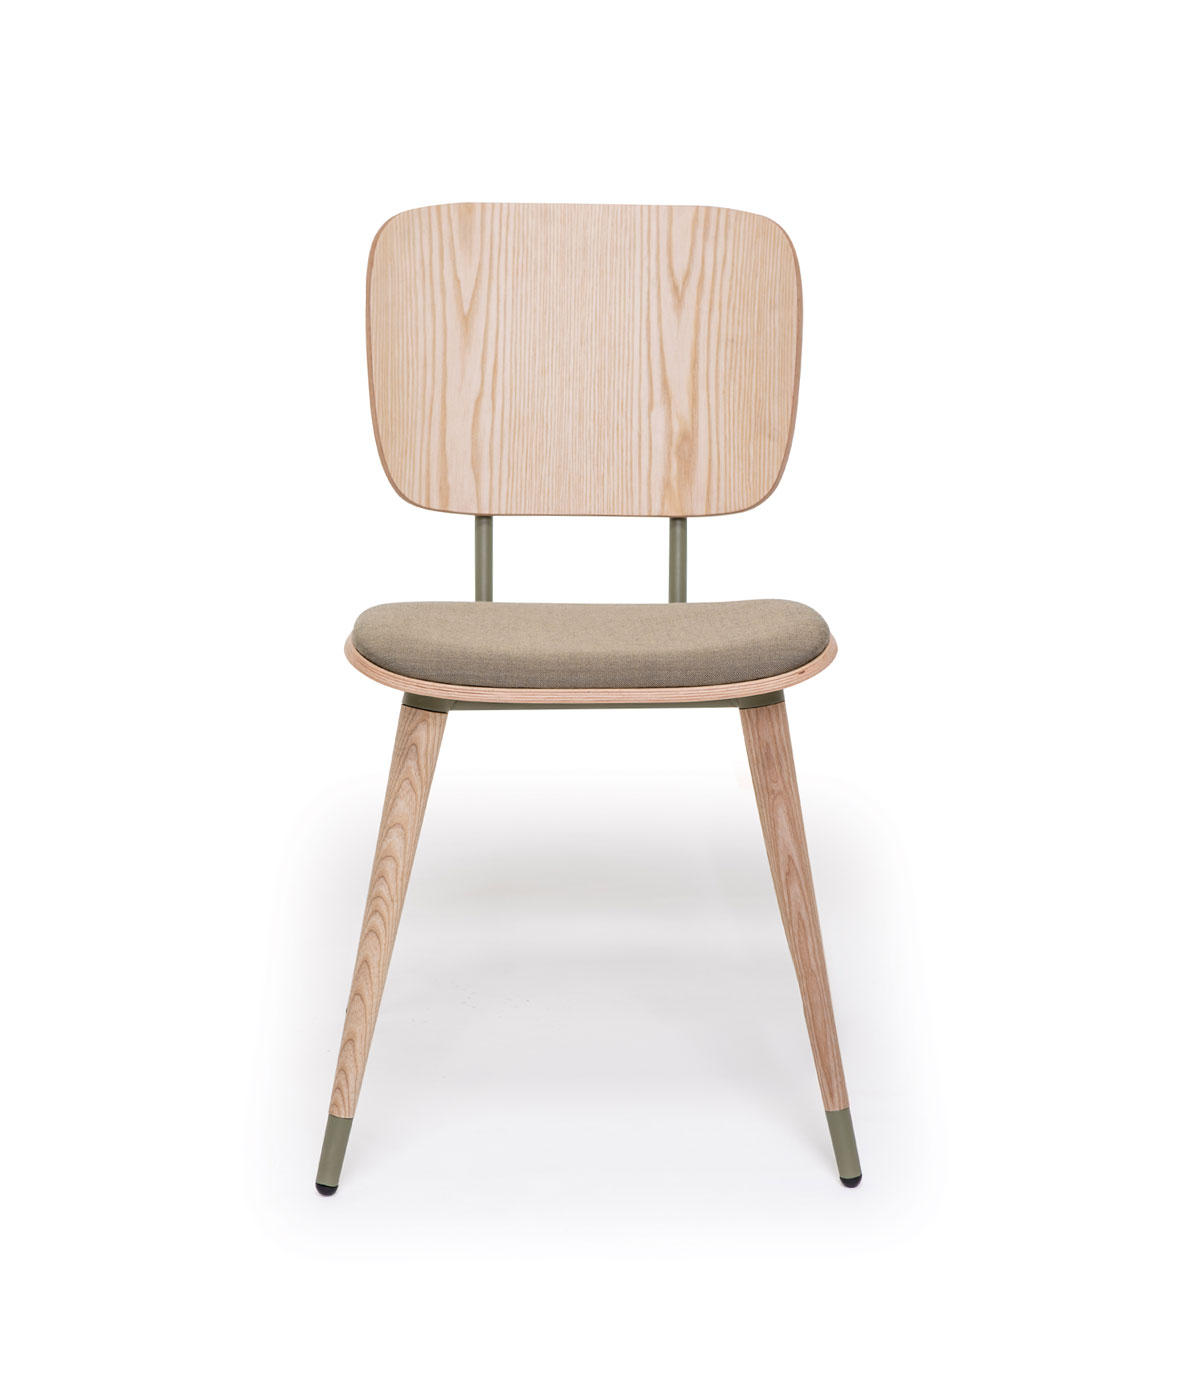 ABC chair with wooden legs - Vergés